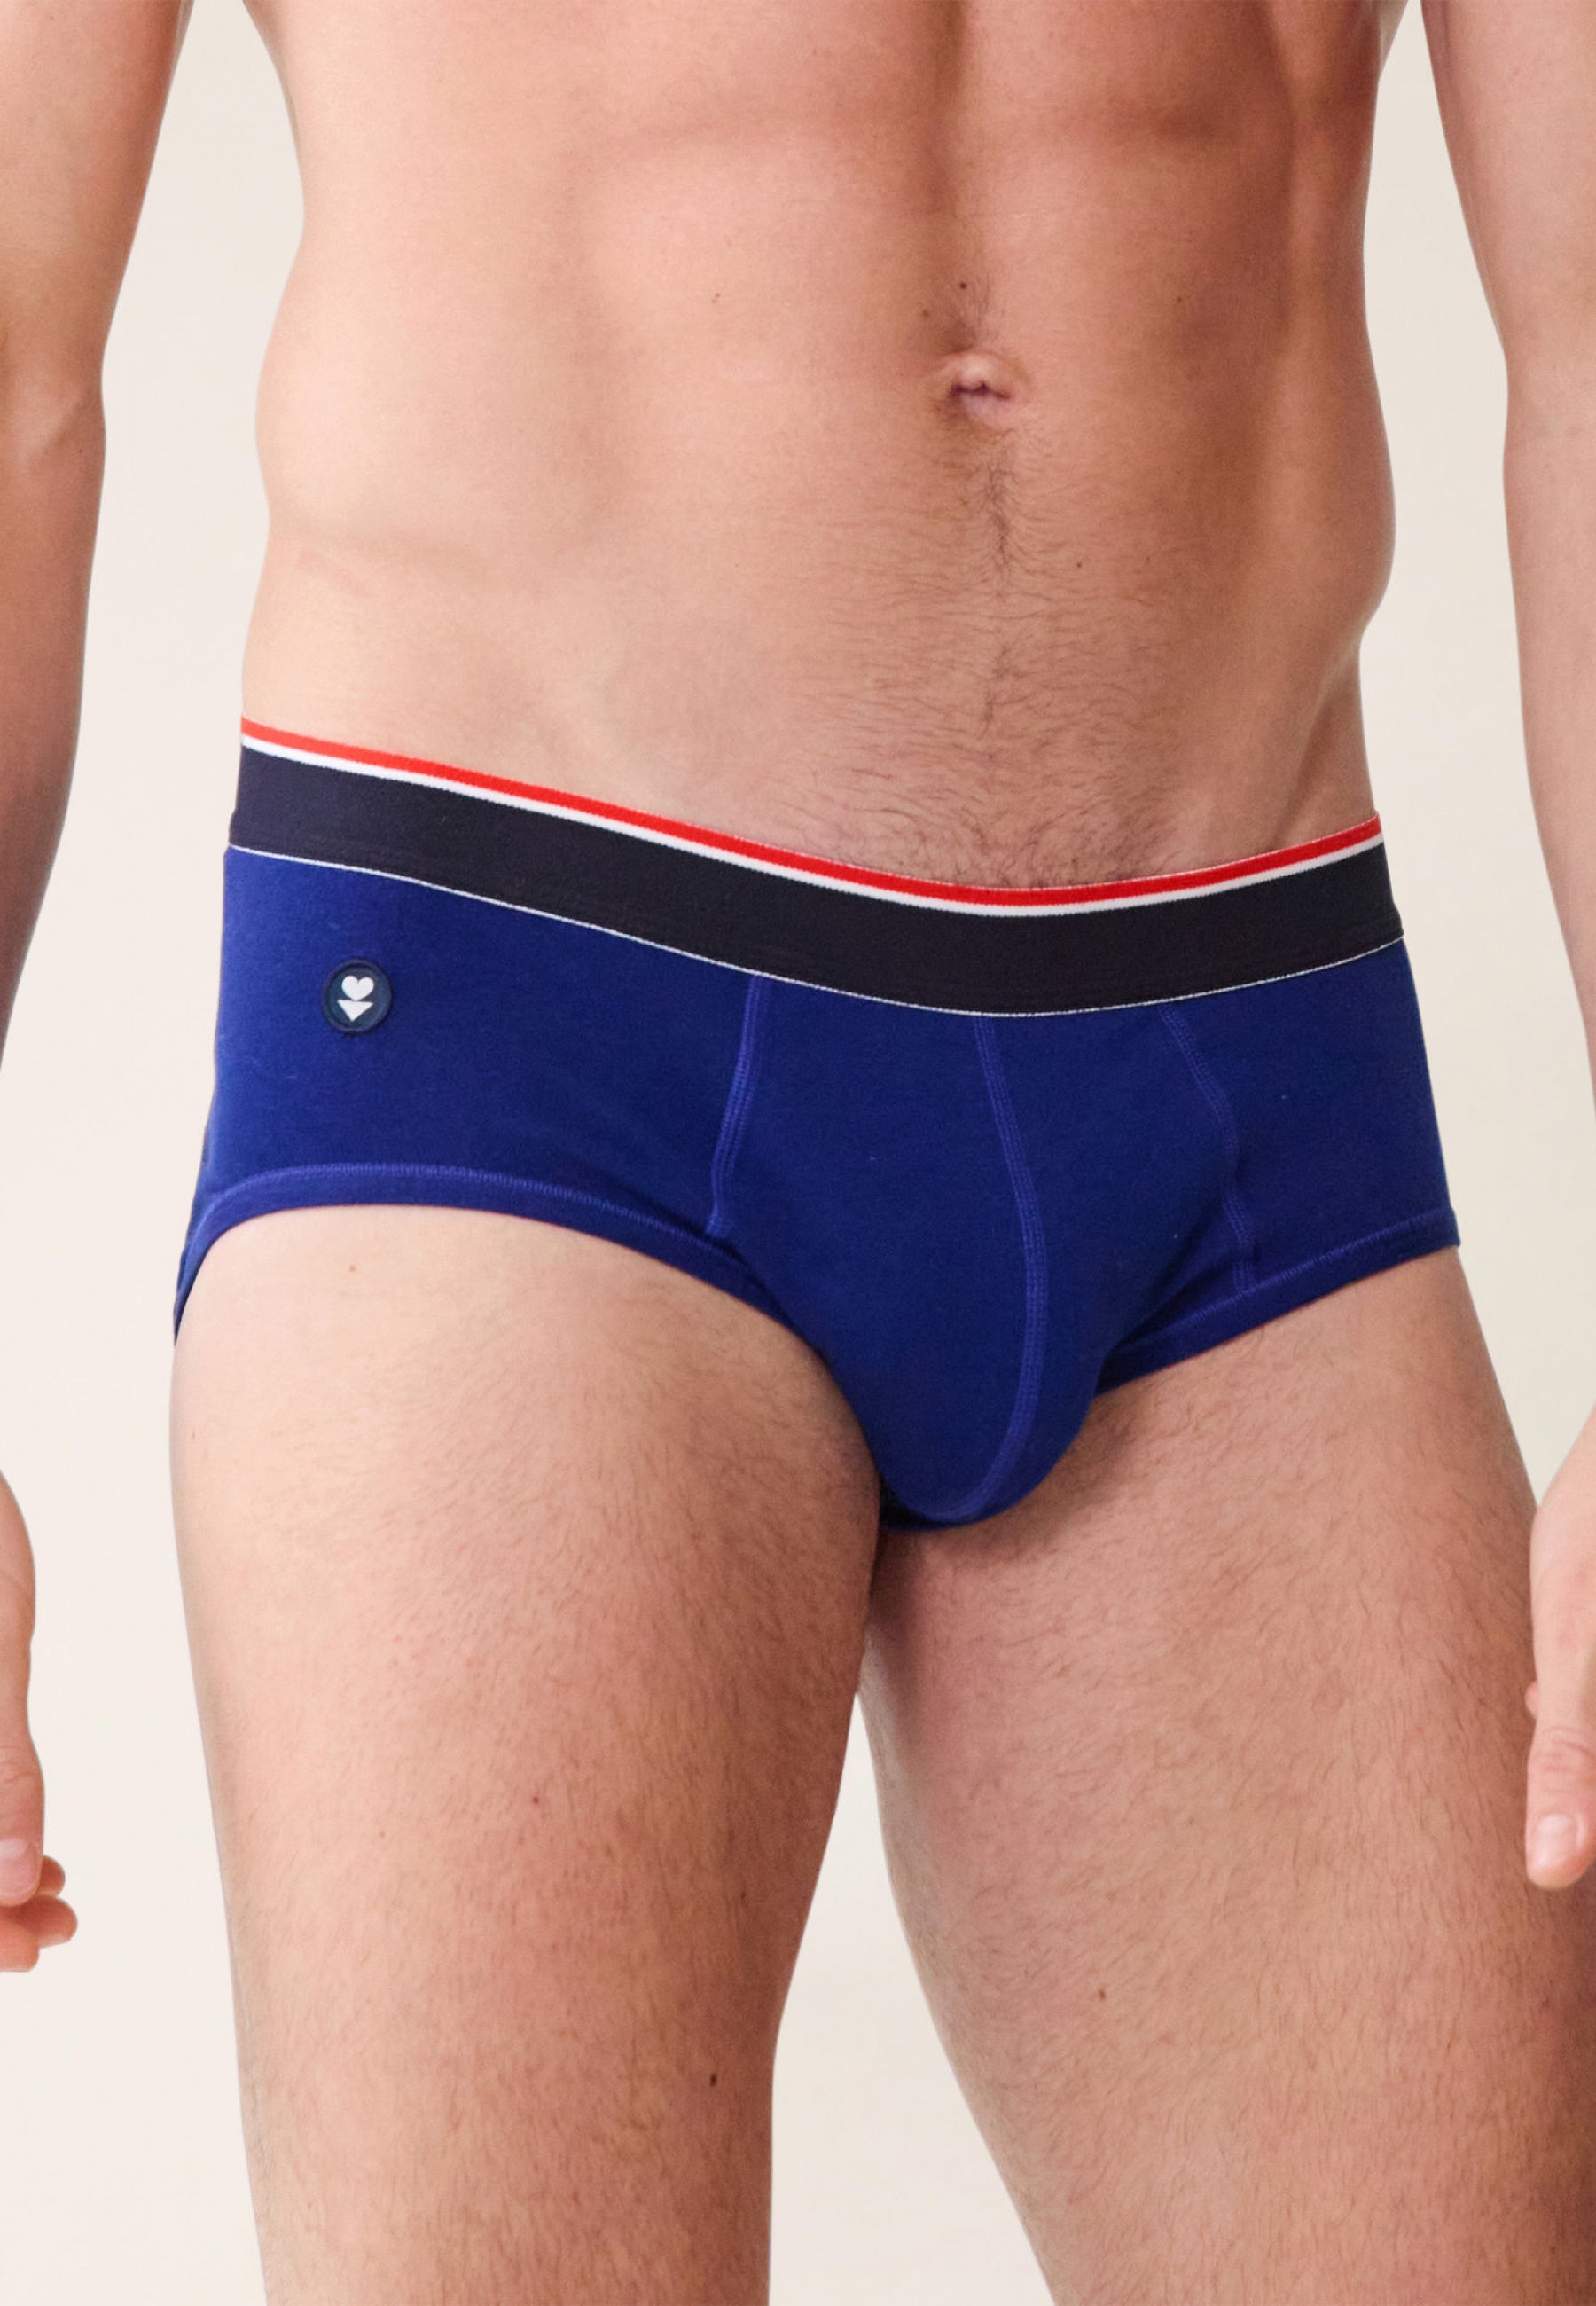 Men's Underwear Made In France - Le slip français 🇫🇷